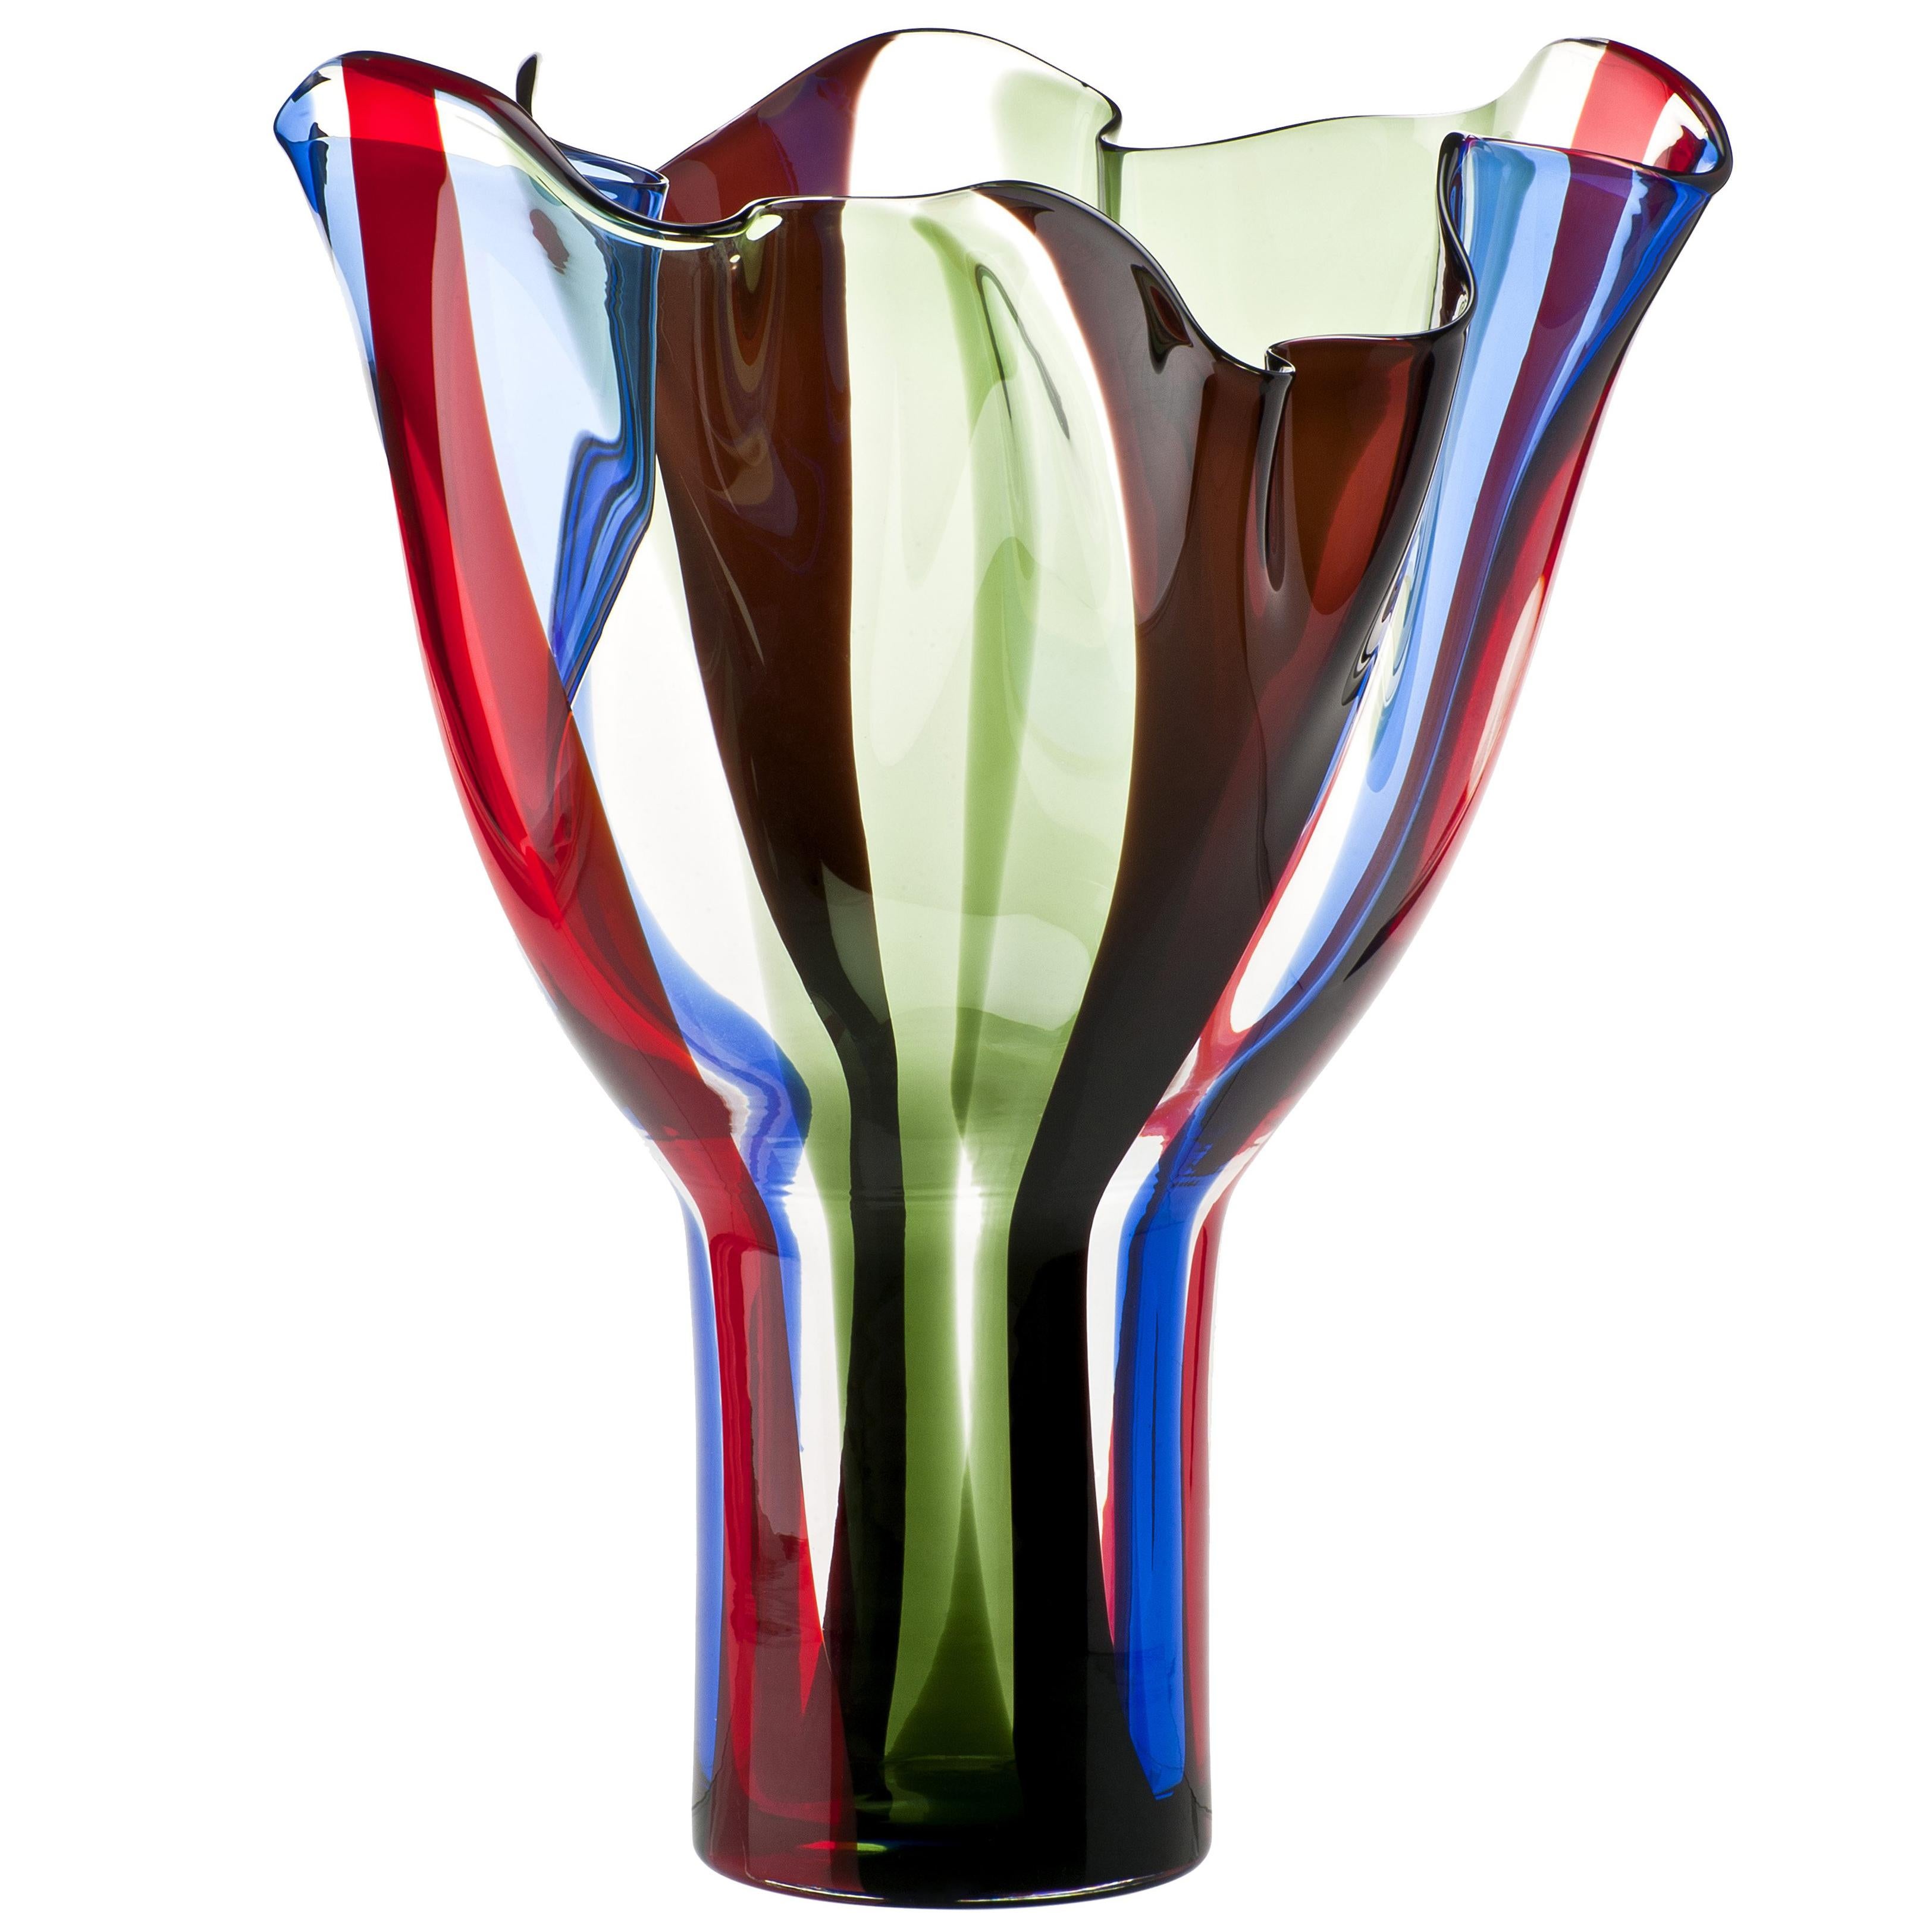 Venini Kukinto Glass Vase in Multi-Color by Timo Sarpaneva